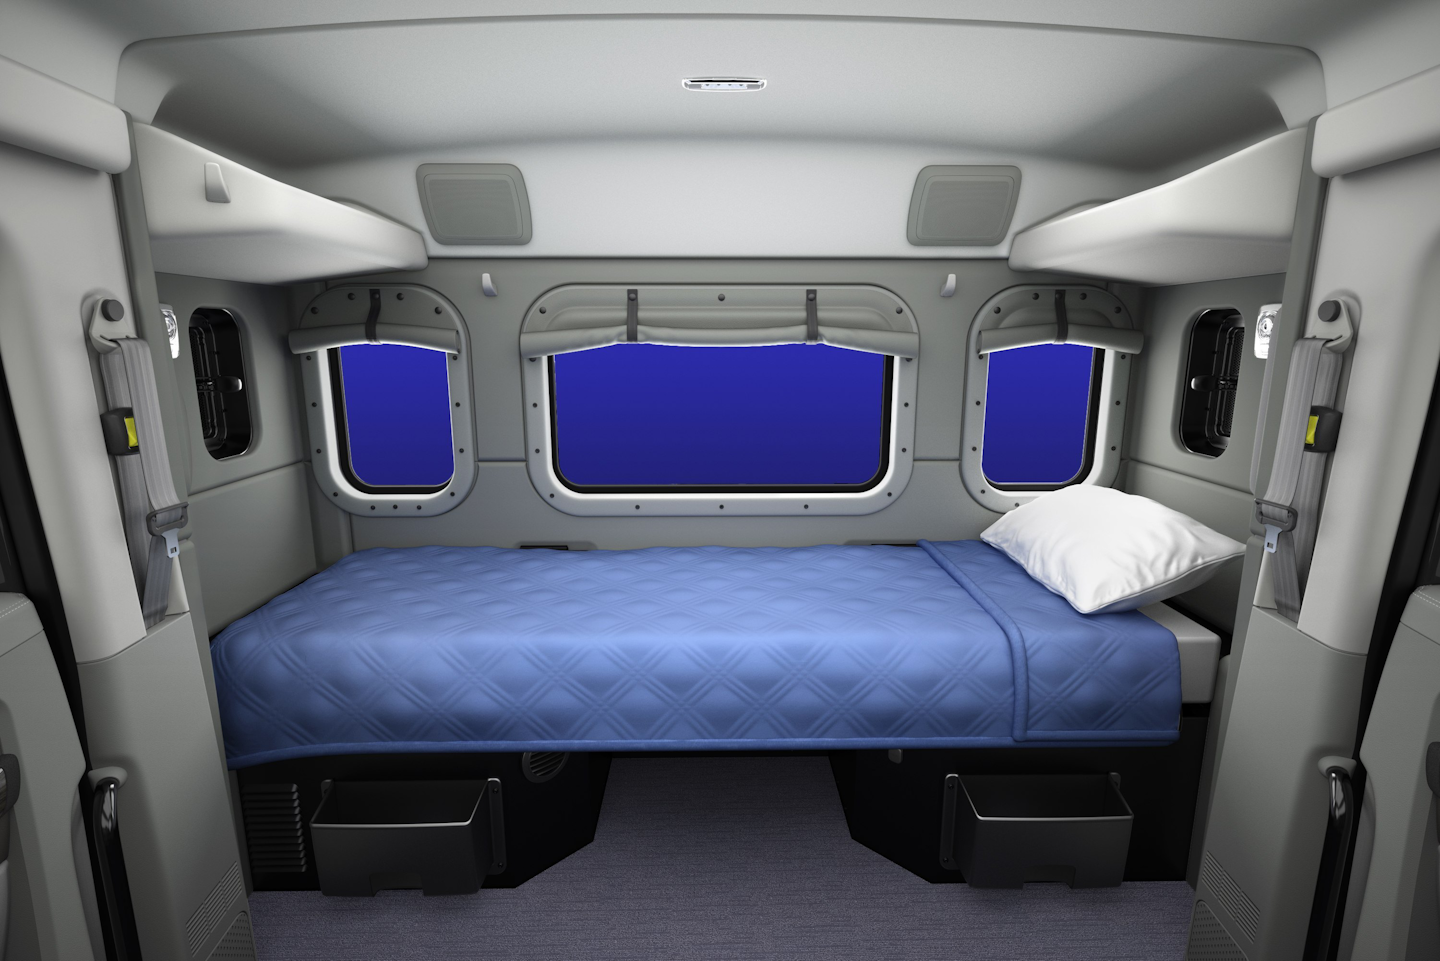 29 inch x 70 inch truck sleeper mattress